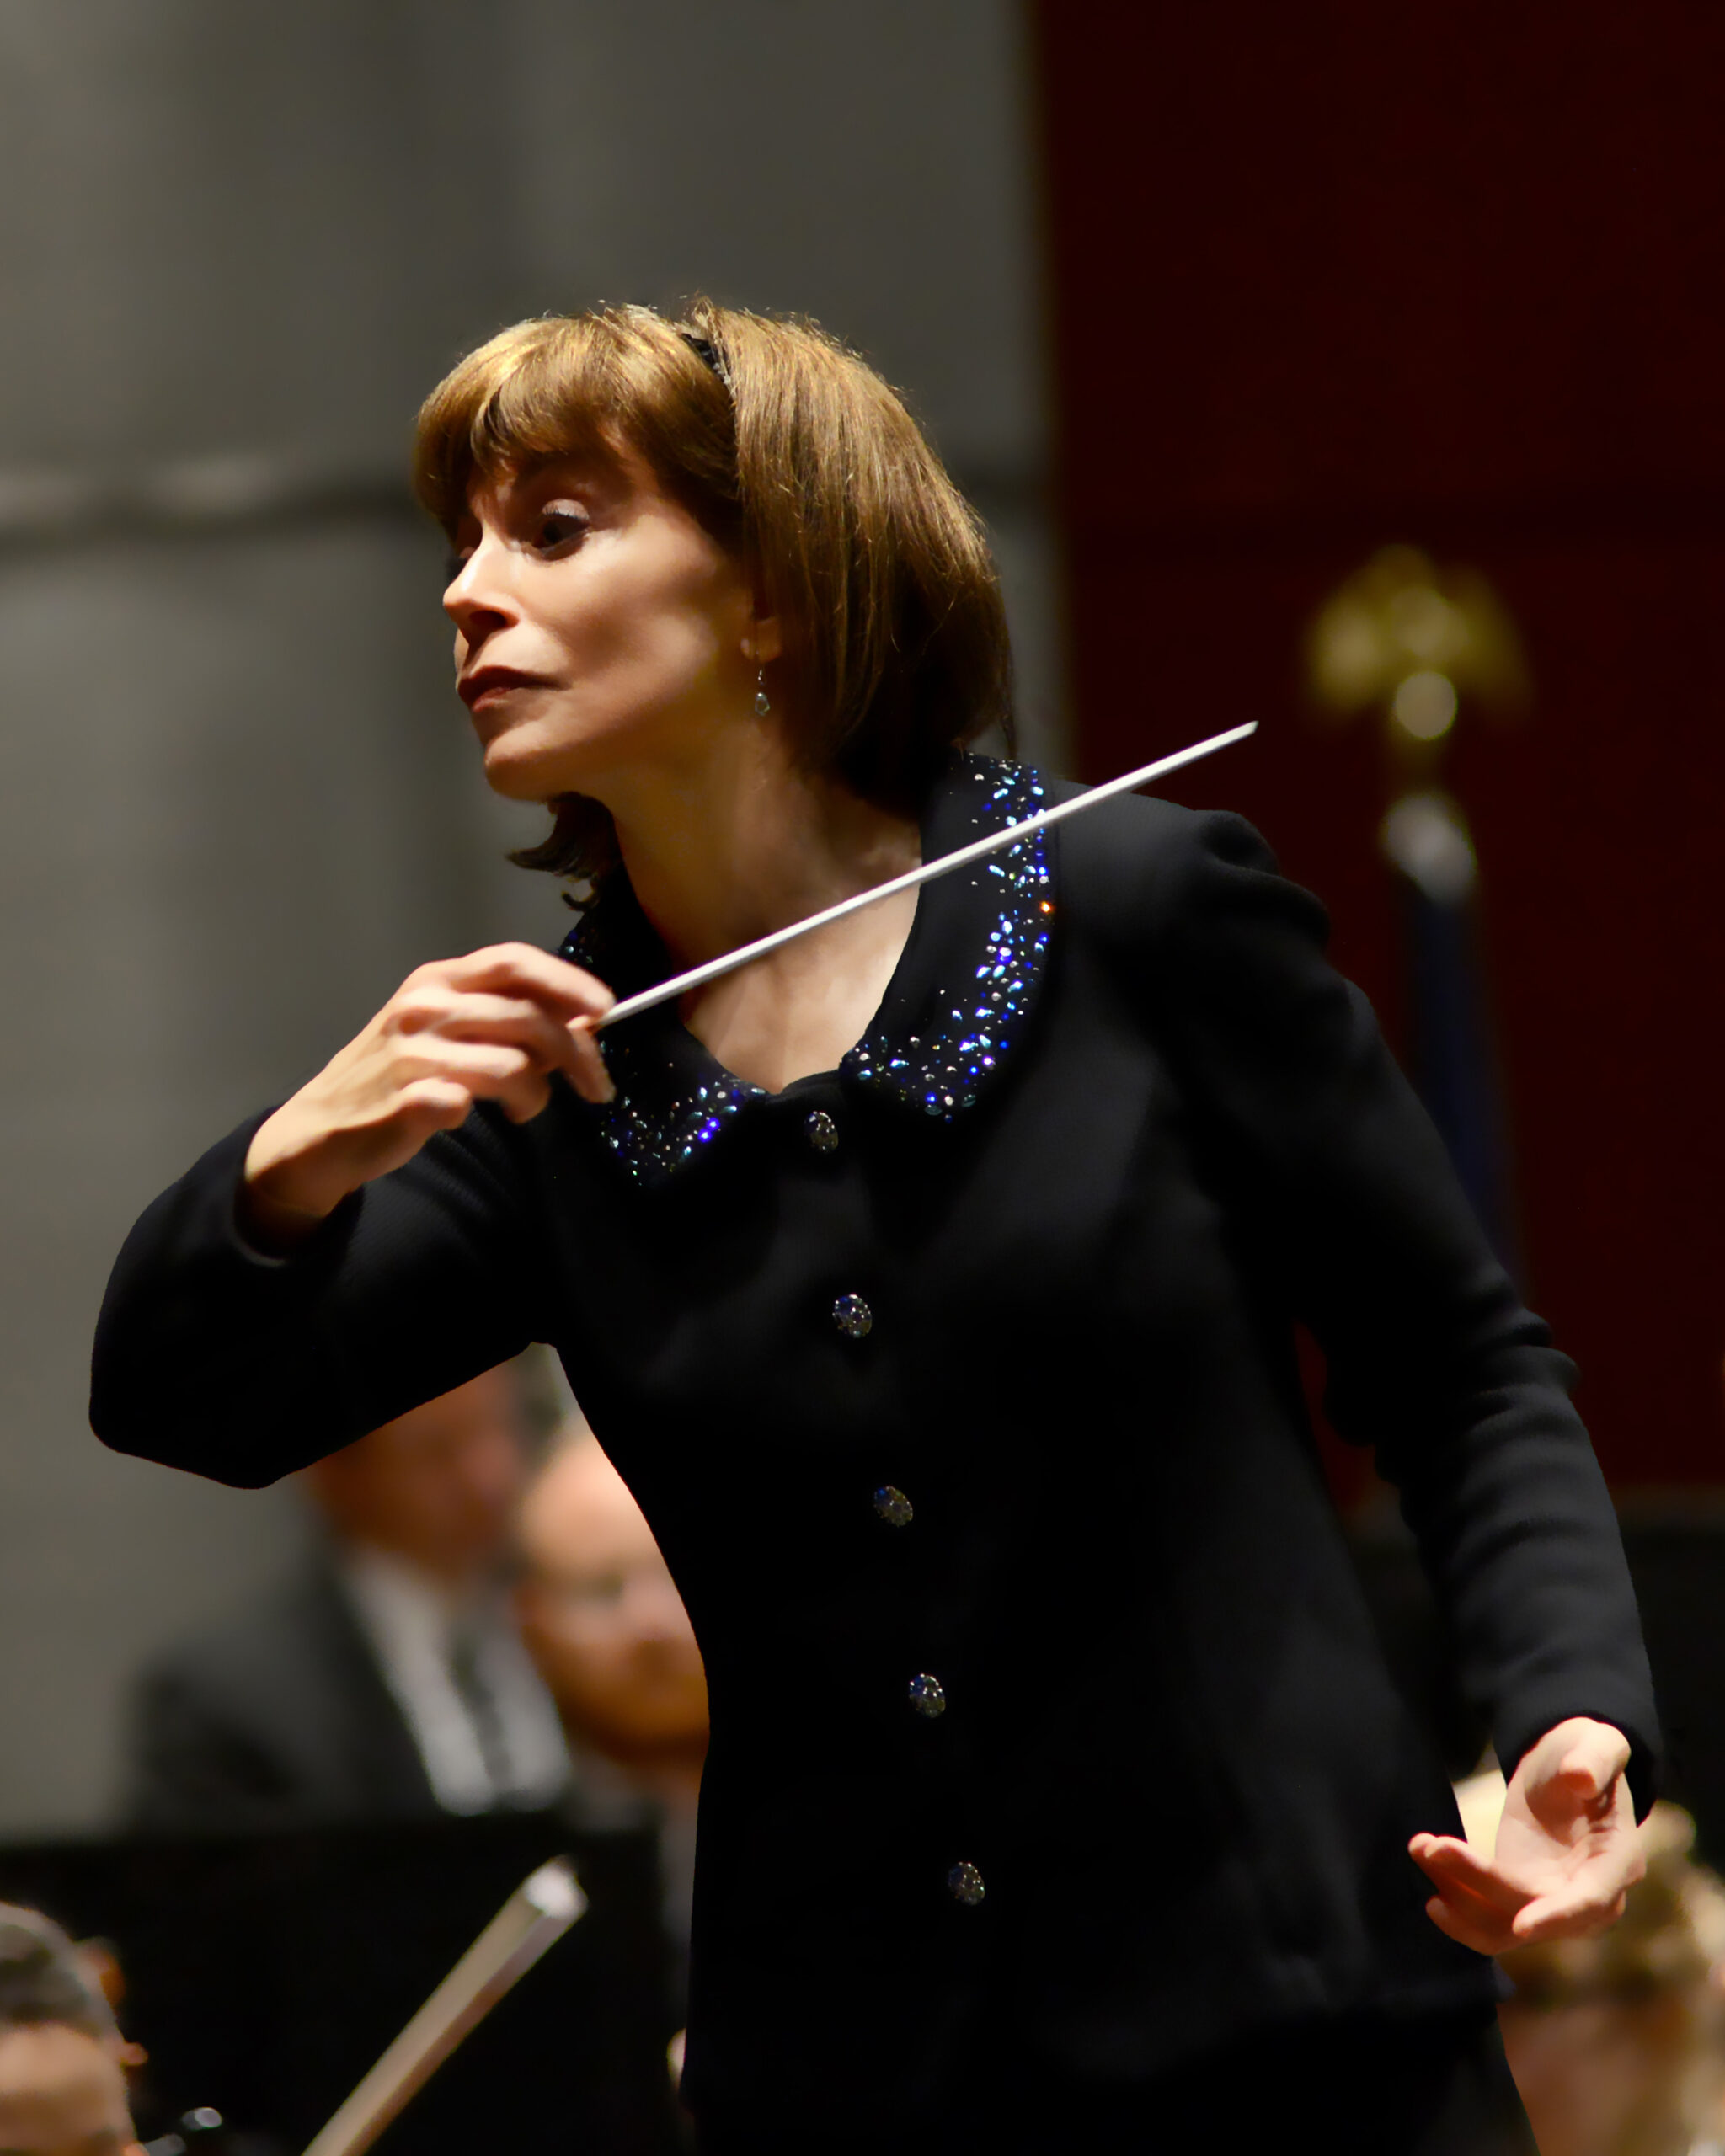 JoAnn Felletta wearing black and conducting